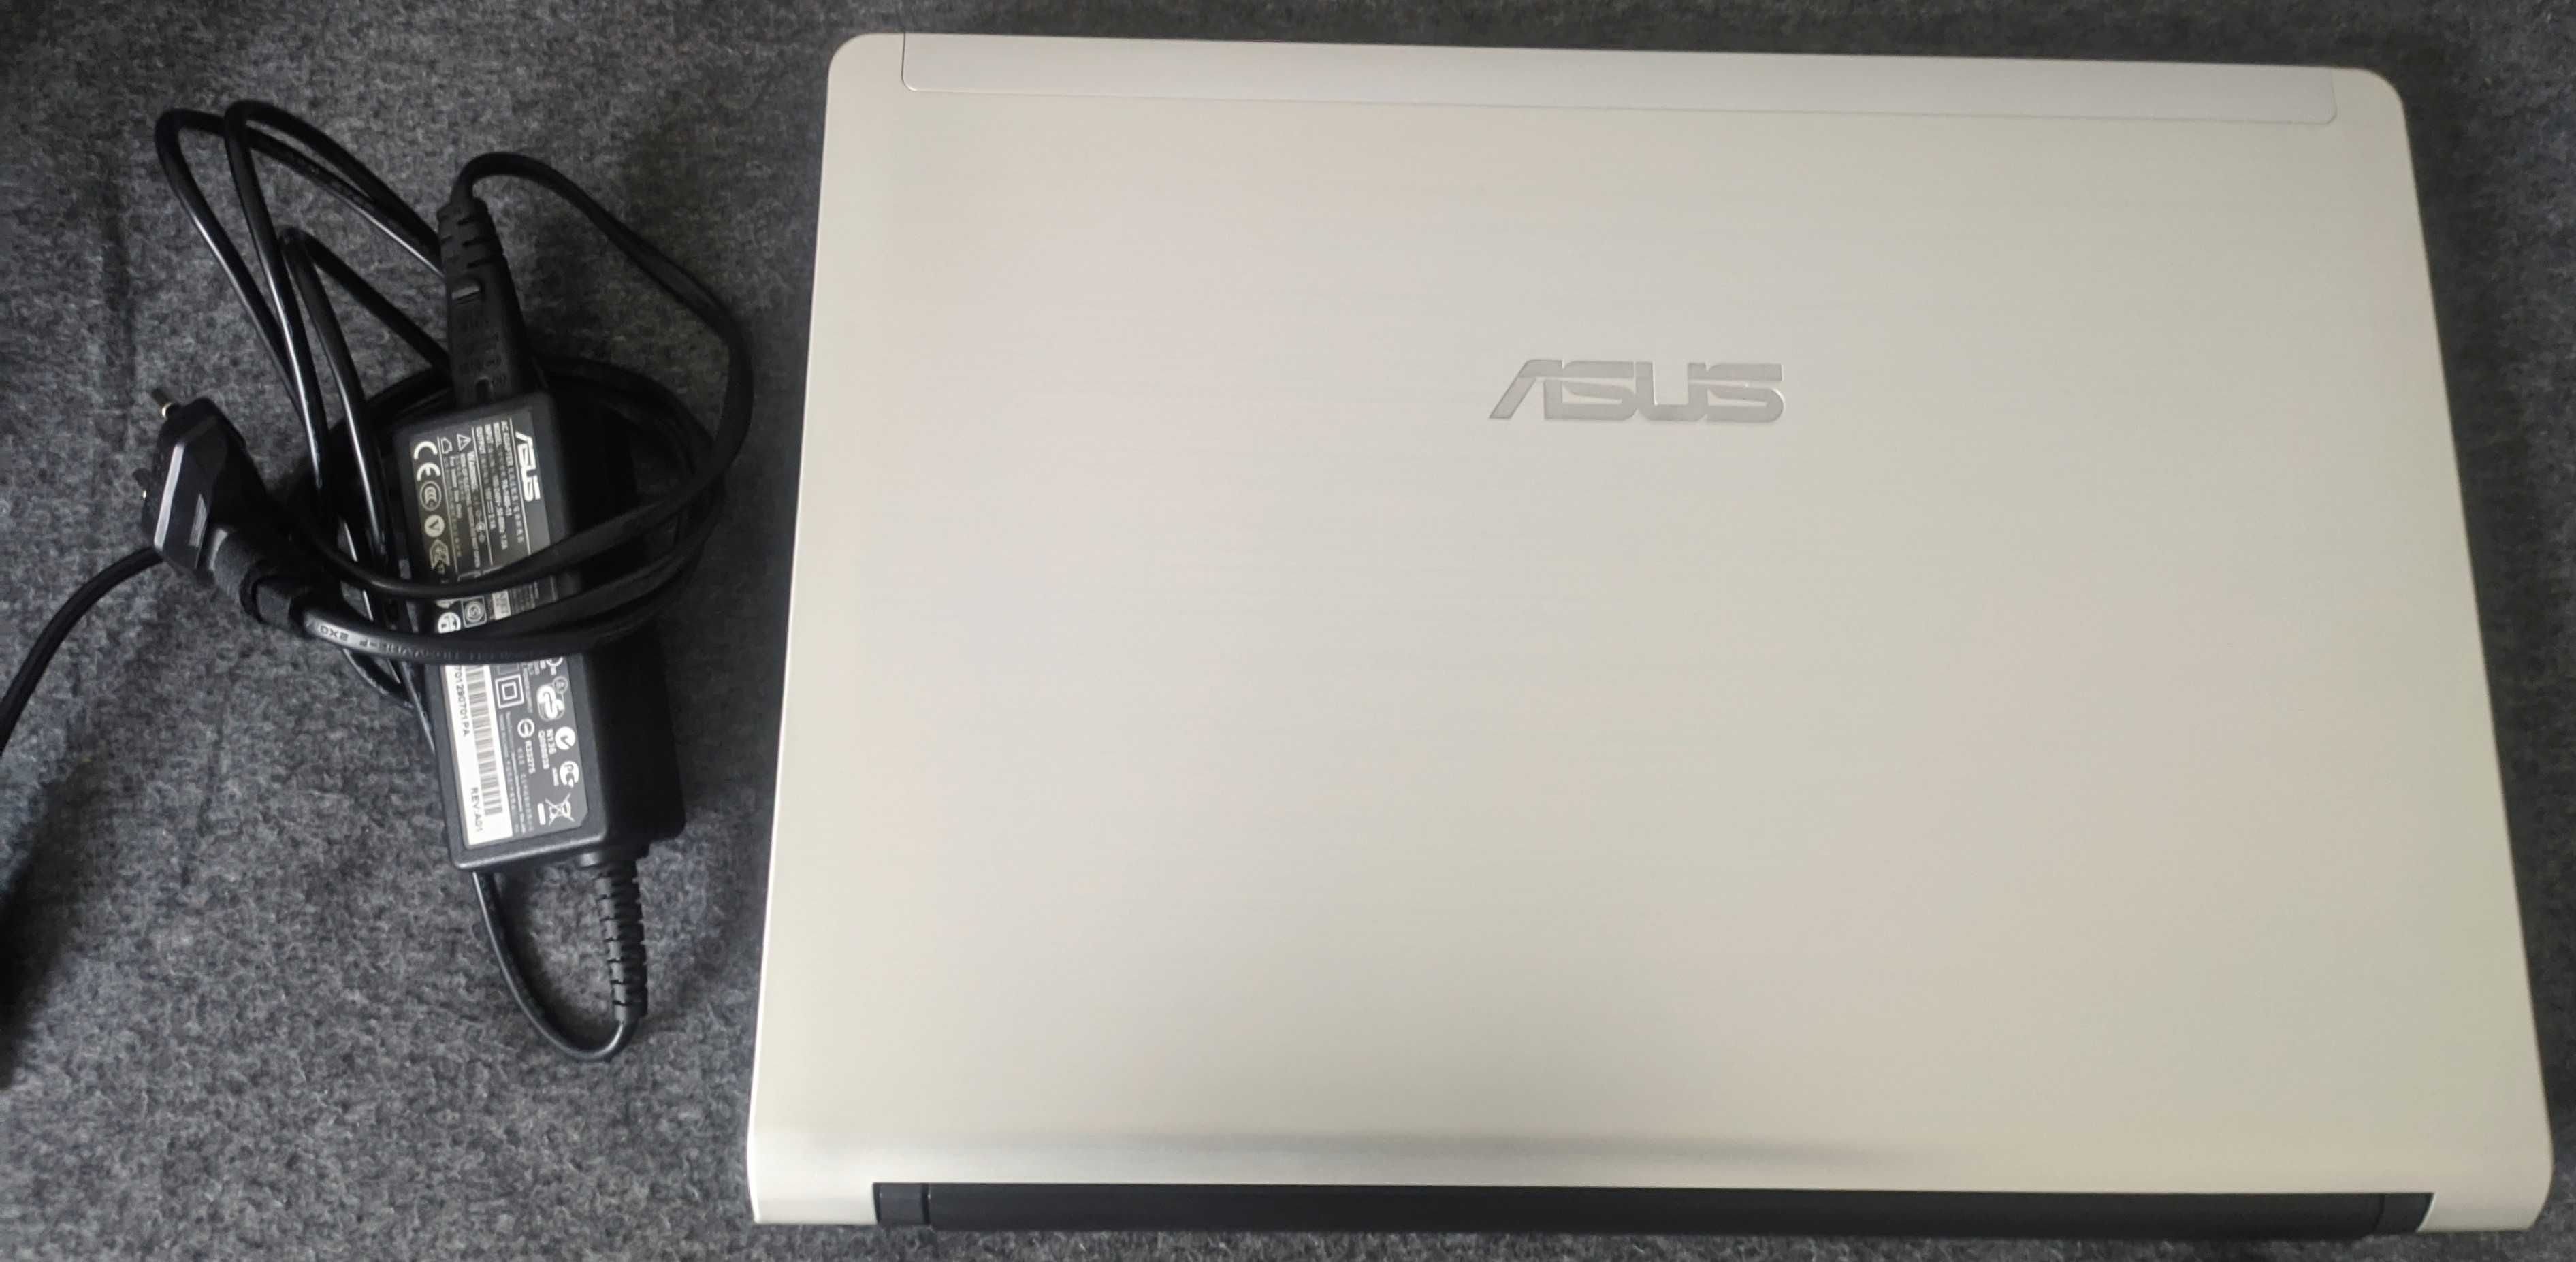 Rozbudowany laptop ASUS UL80Ag 14 cali